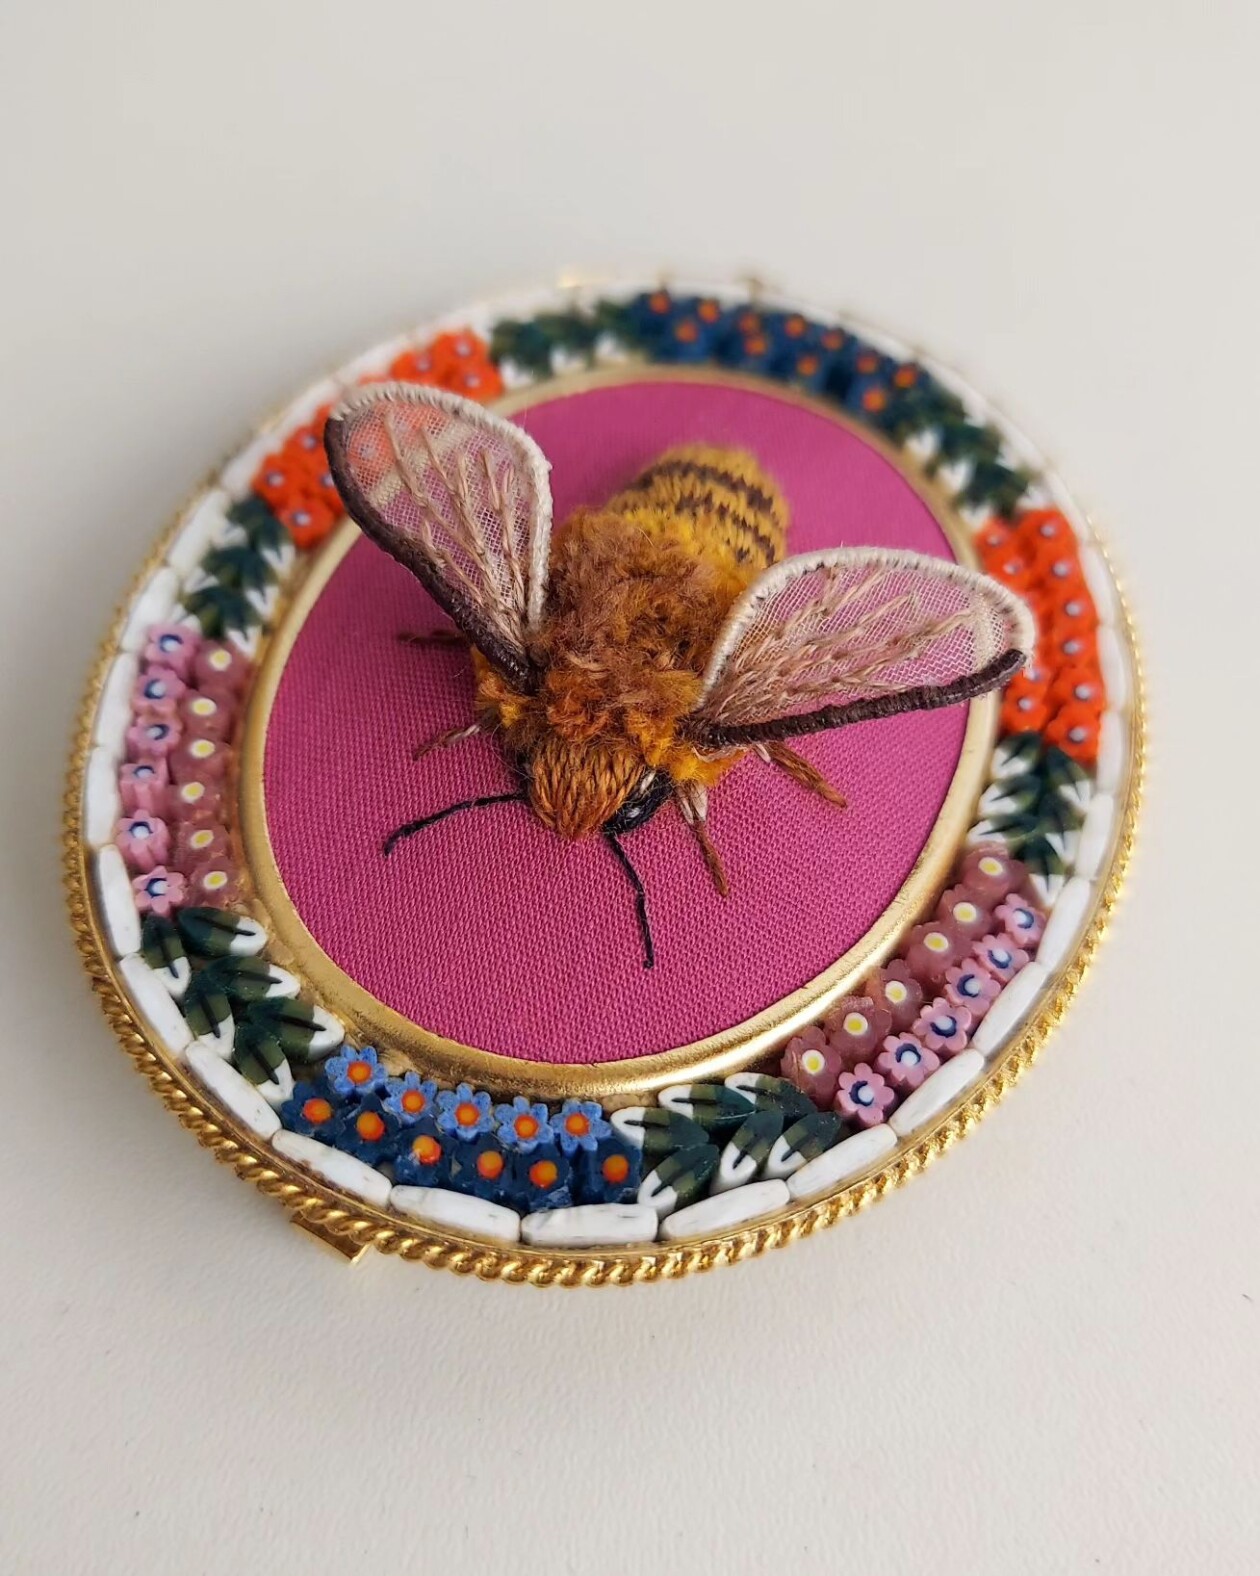 Life Like Three Dimensional Animal Embroideries By Megan Zaniewski (17)